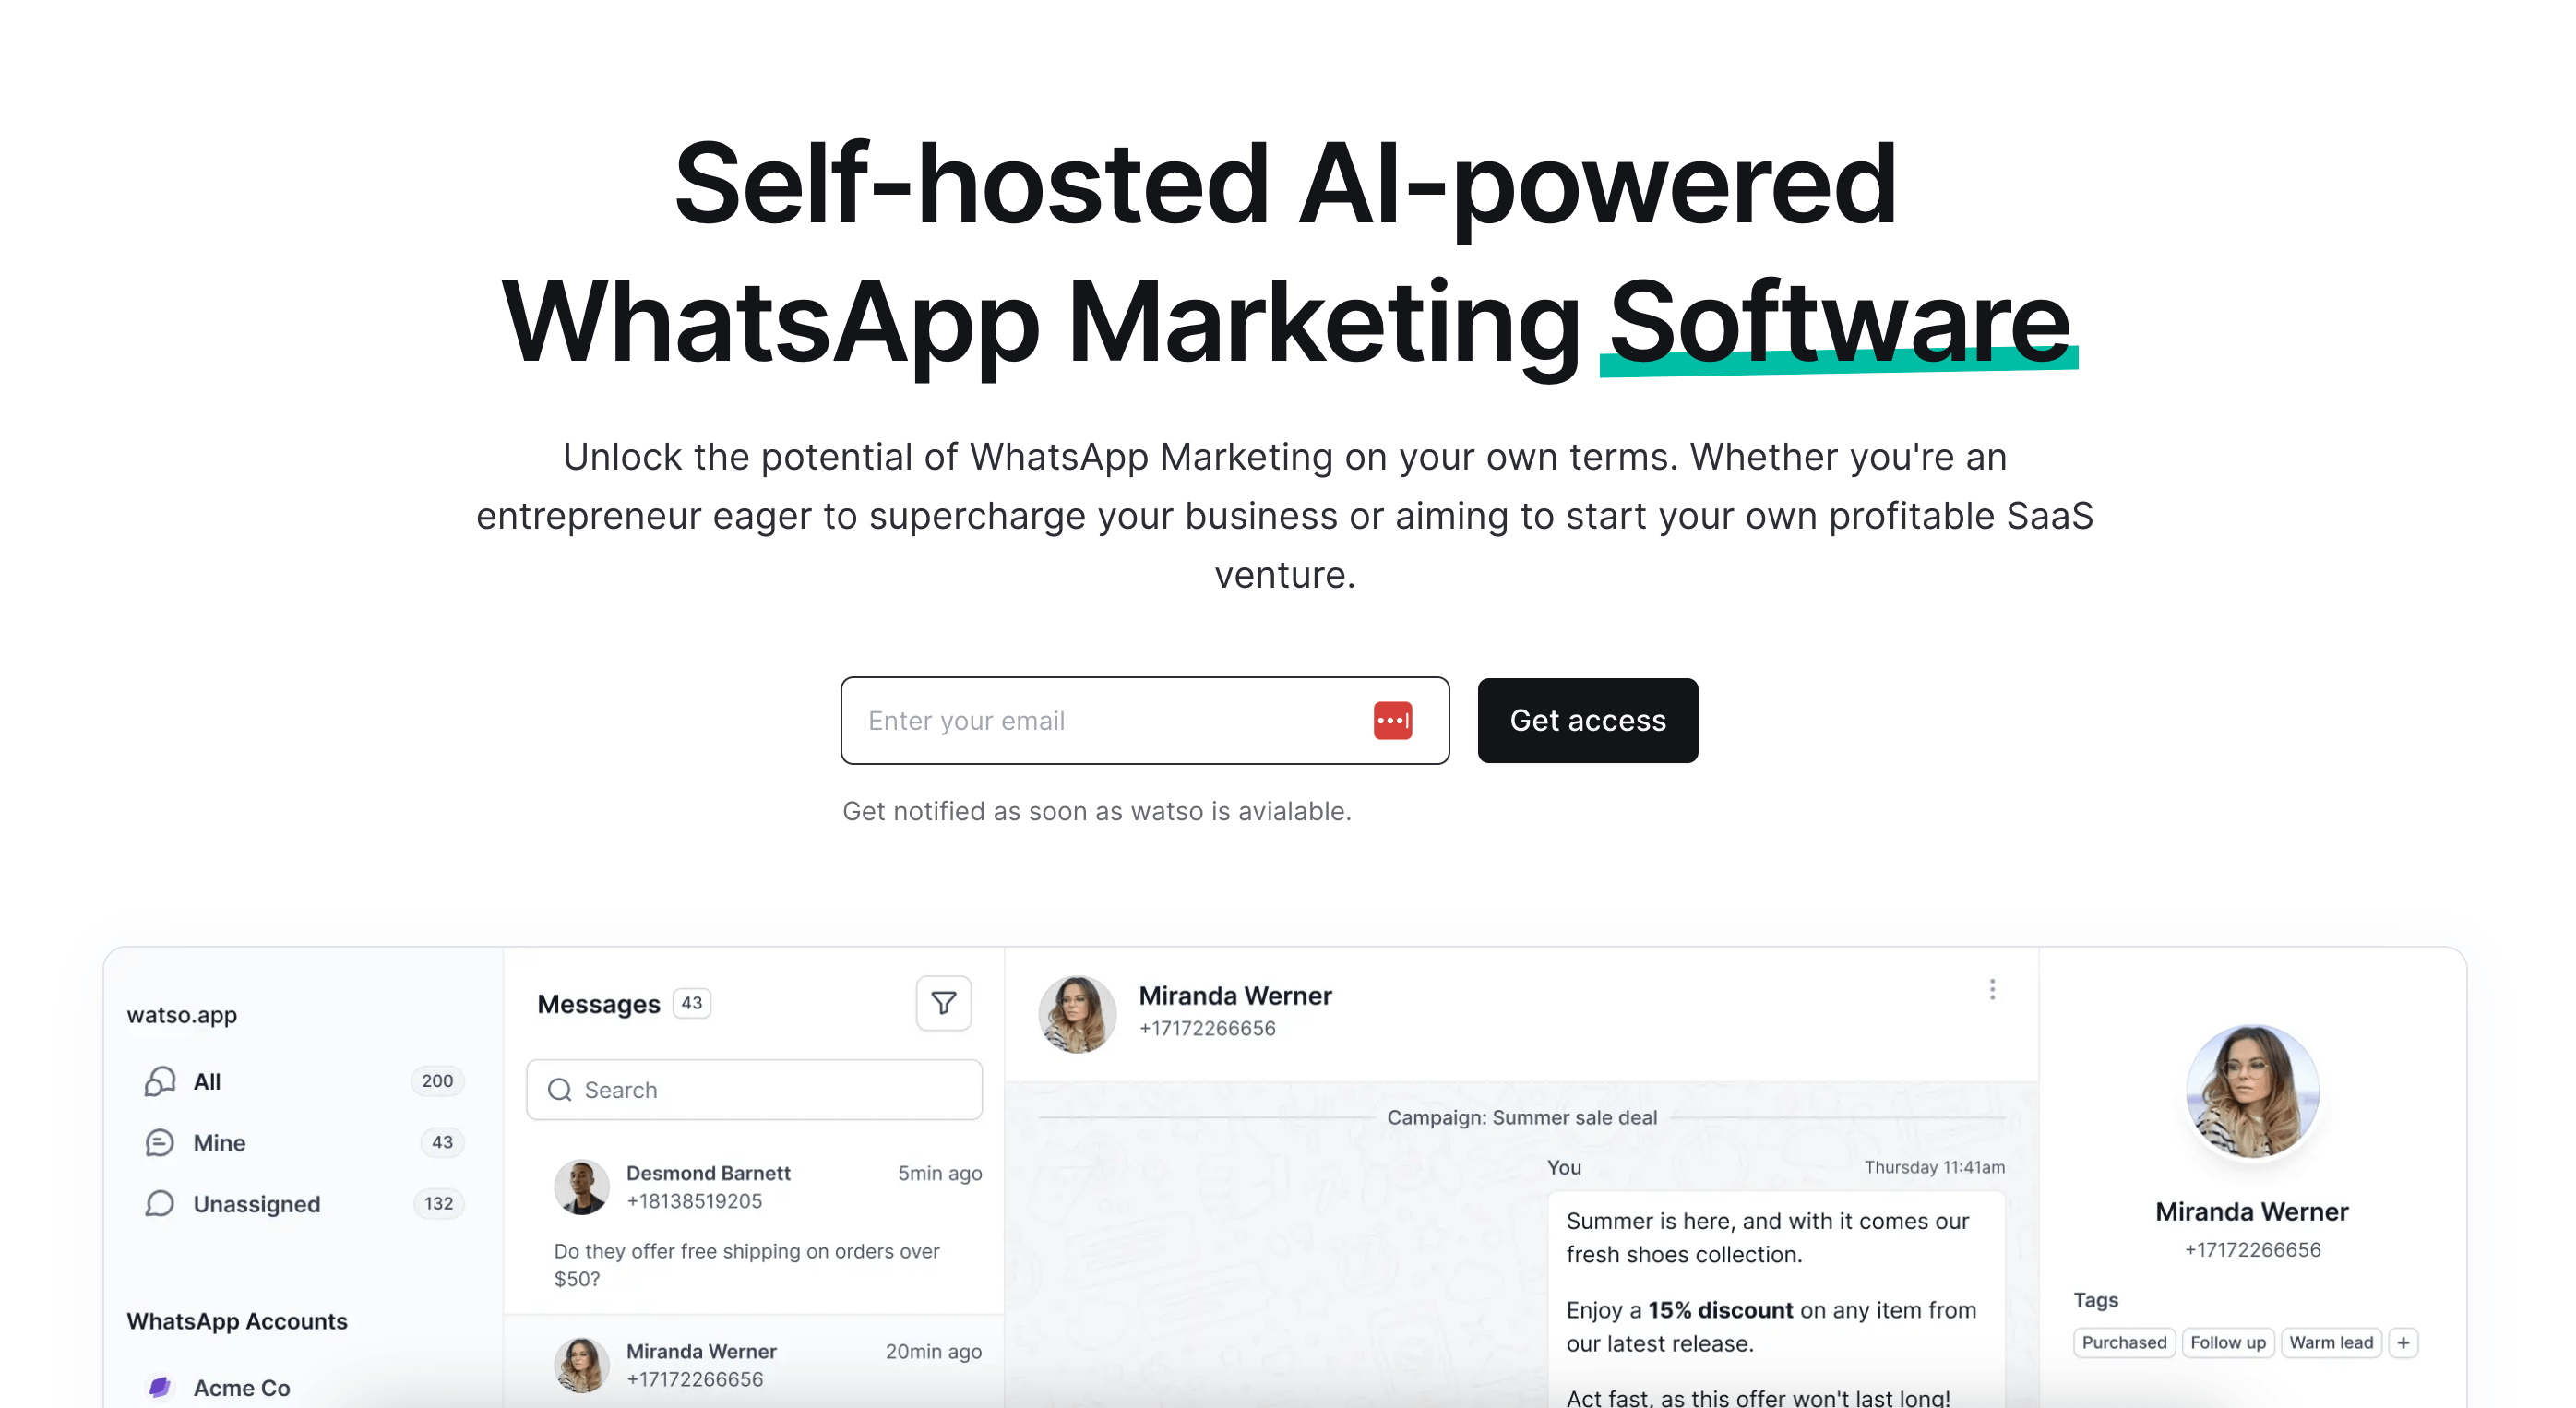 Self-hosted AI-powered WhatsApp Marketing Software